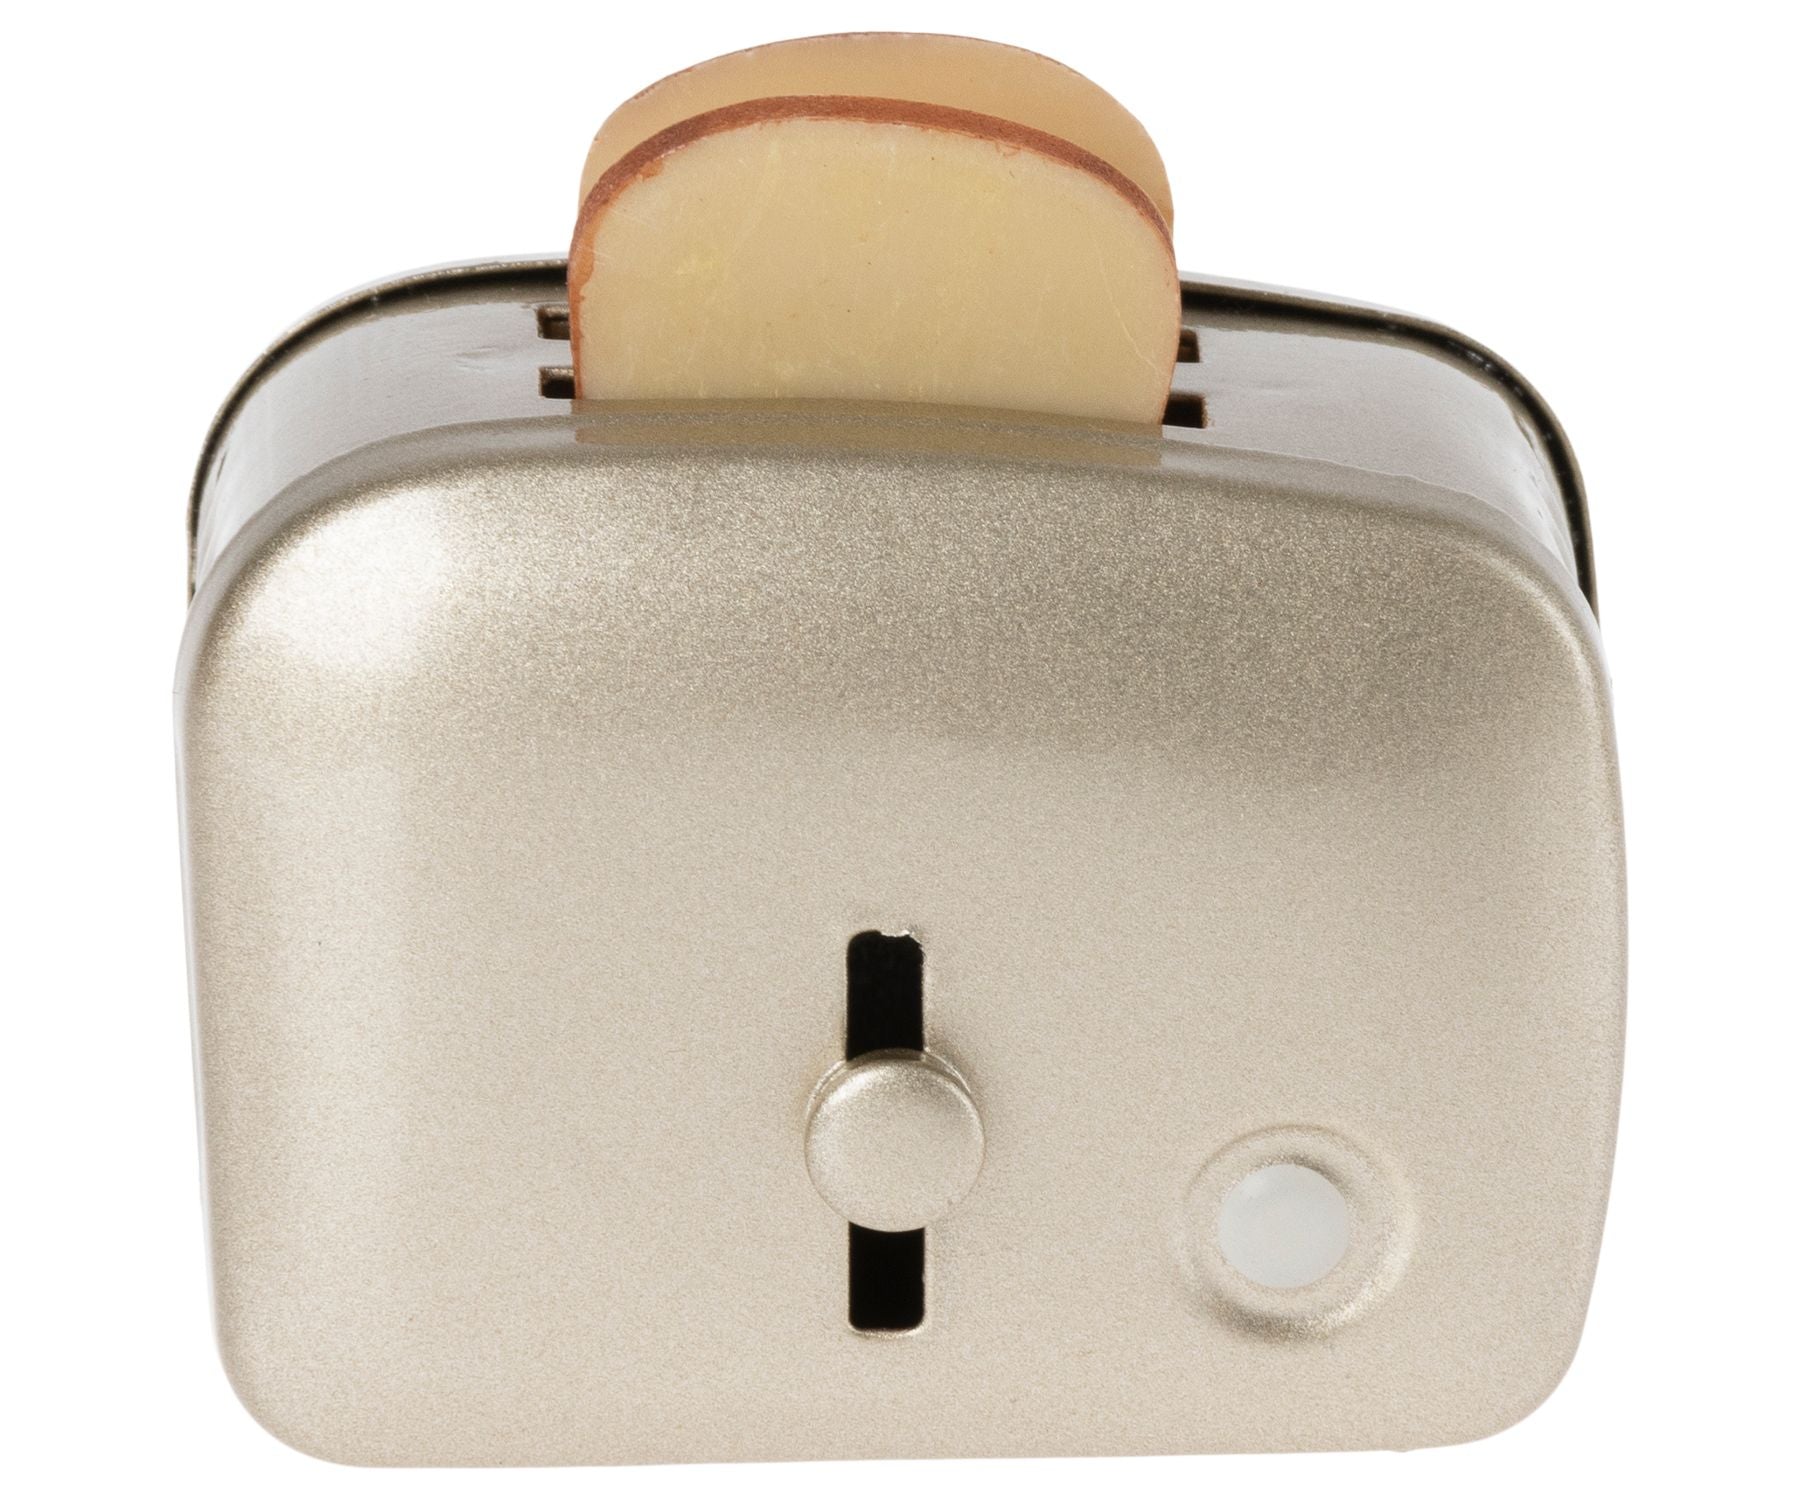 Maileg Miniature Toaster & Bread - Silver